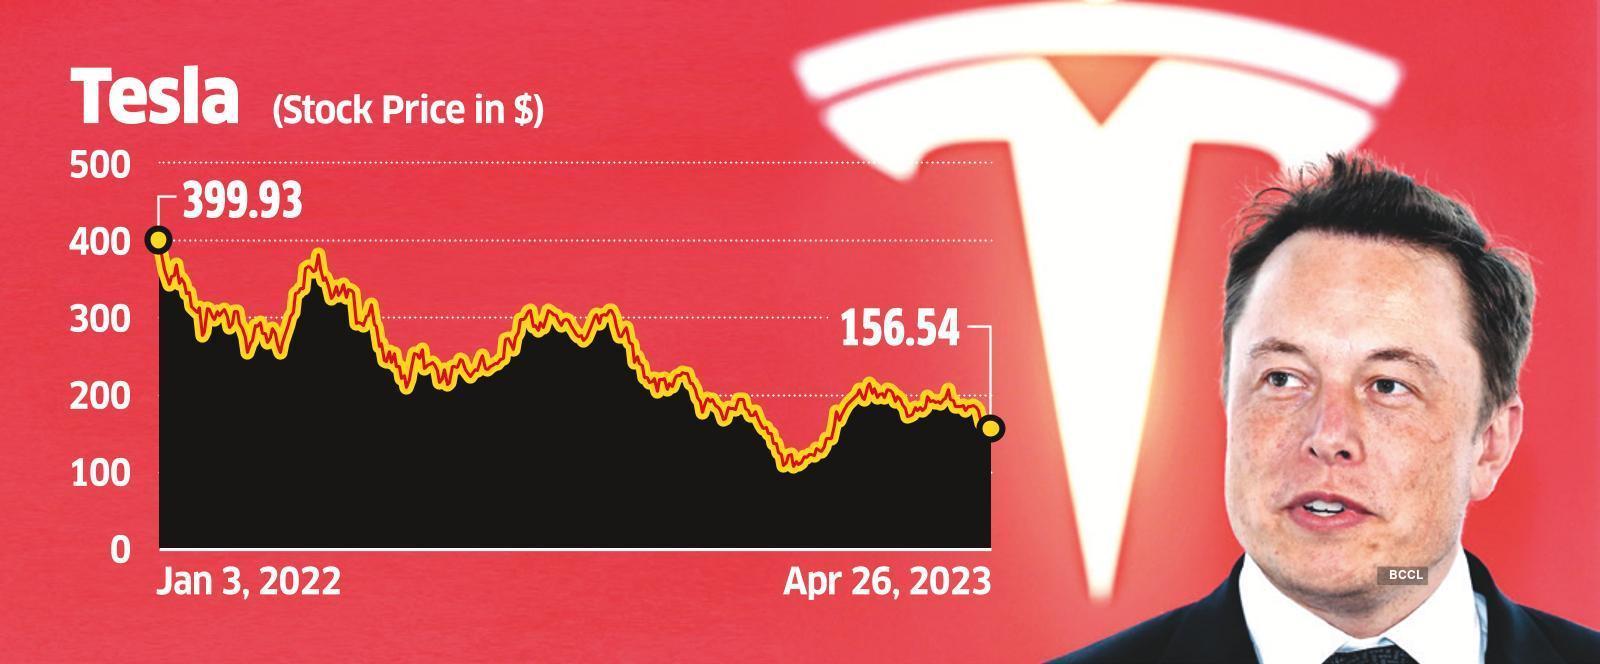 Tesla Stocks Teslas Plunge Drags Valuation Below 500 Billion The Economic Times 9641